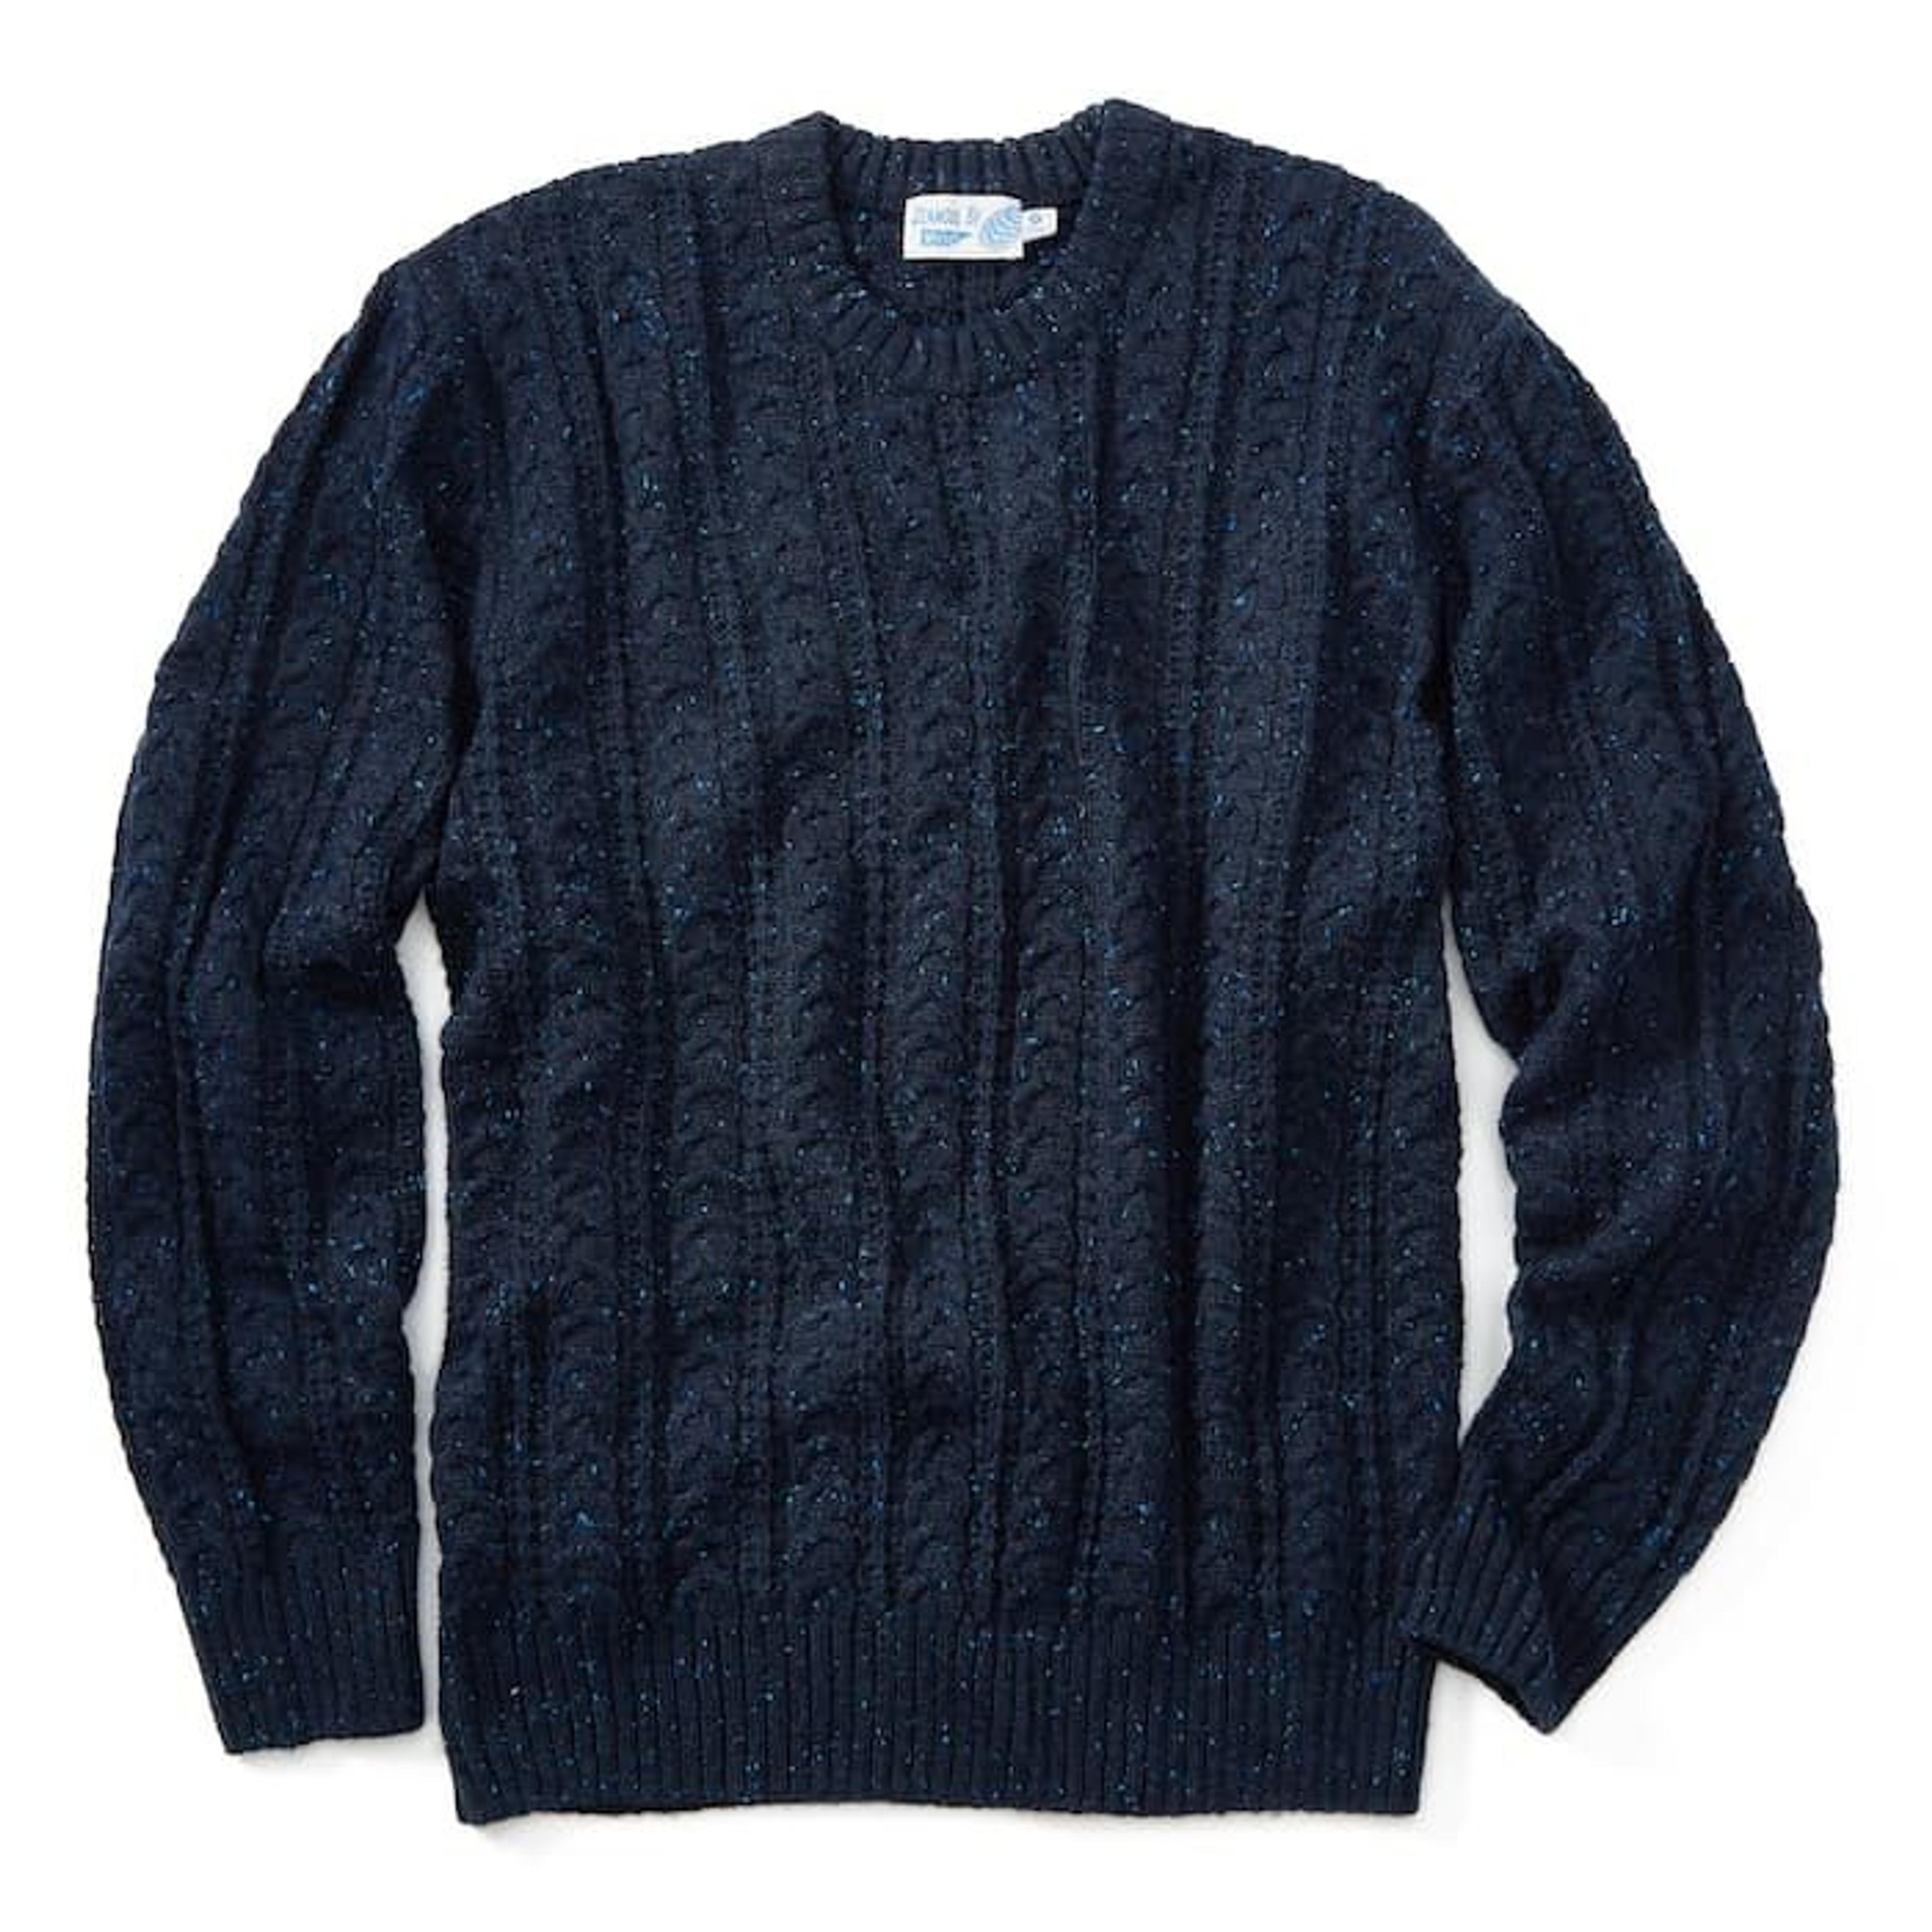 huckberry.com/store/wellen/category/p/63987-seawool-fisherman-sweater